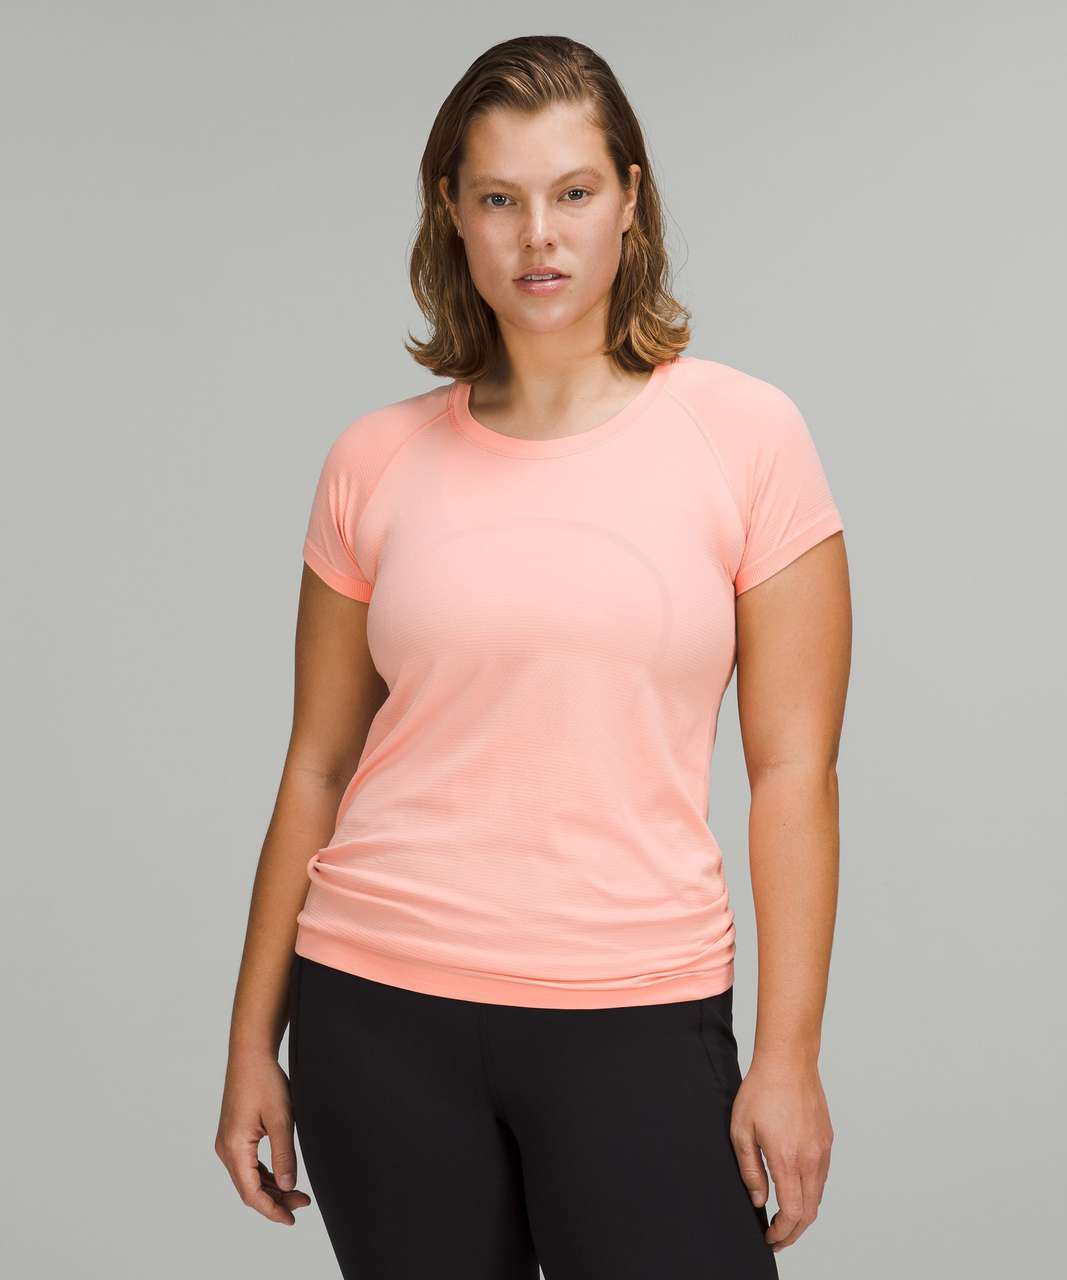 Lululemon Swiftly Tech Short Sleeve Shirt 2.0 - Dew Pink / Dew Pink